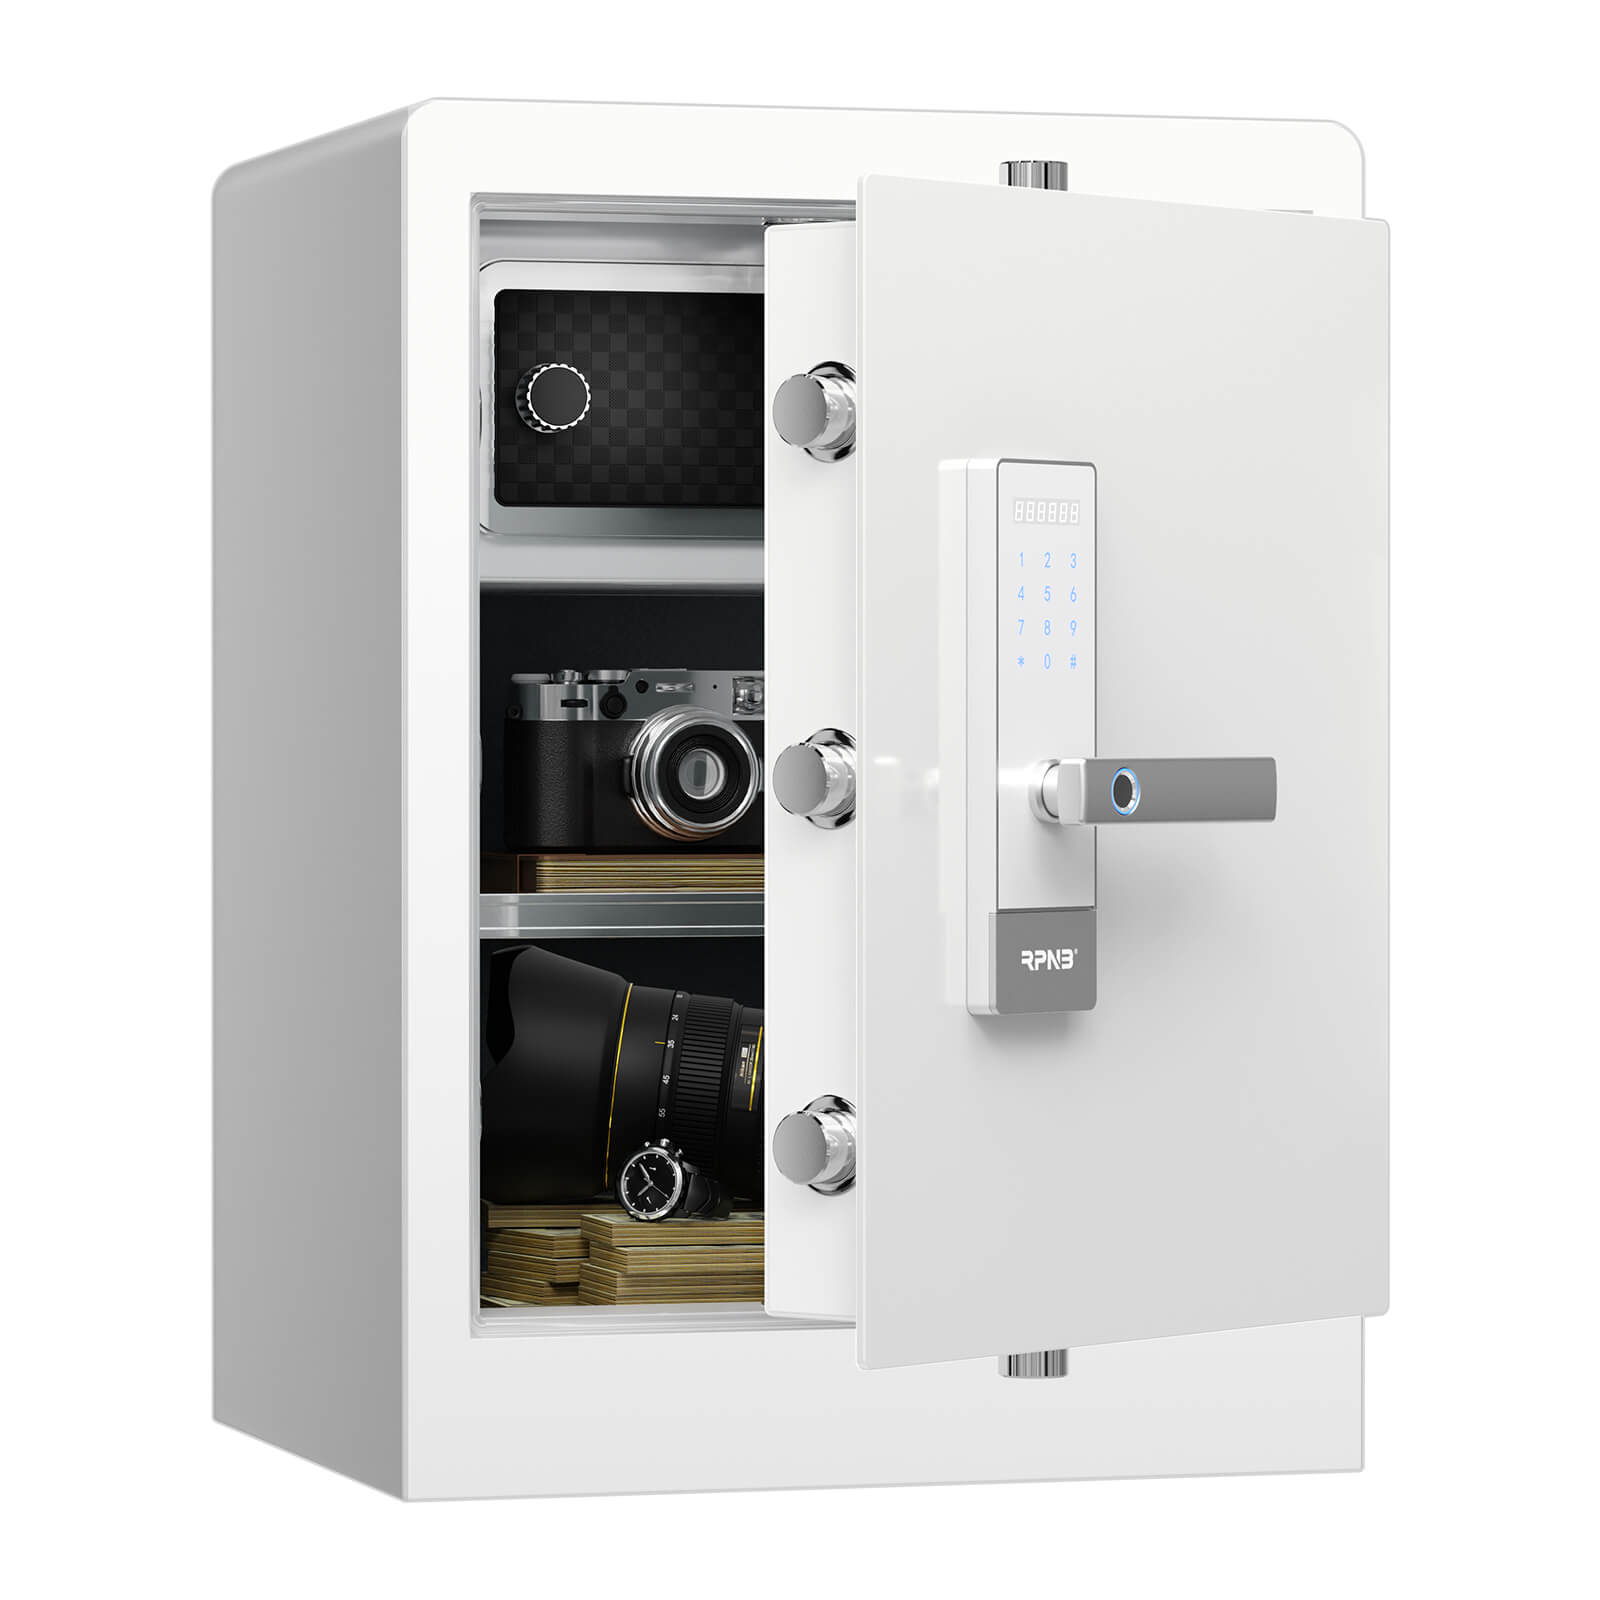 RPNB RPHS60W Smart Touch Screen Biometric Fingerprint Security Safe White Door Open